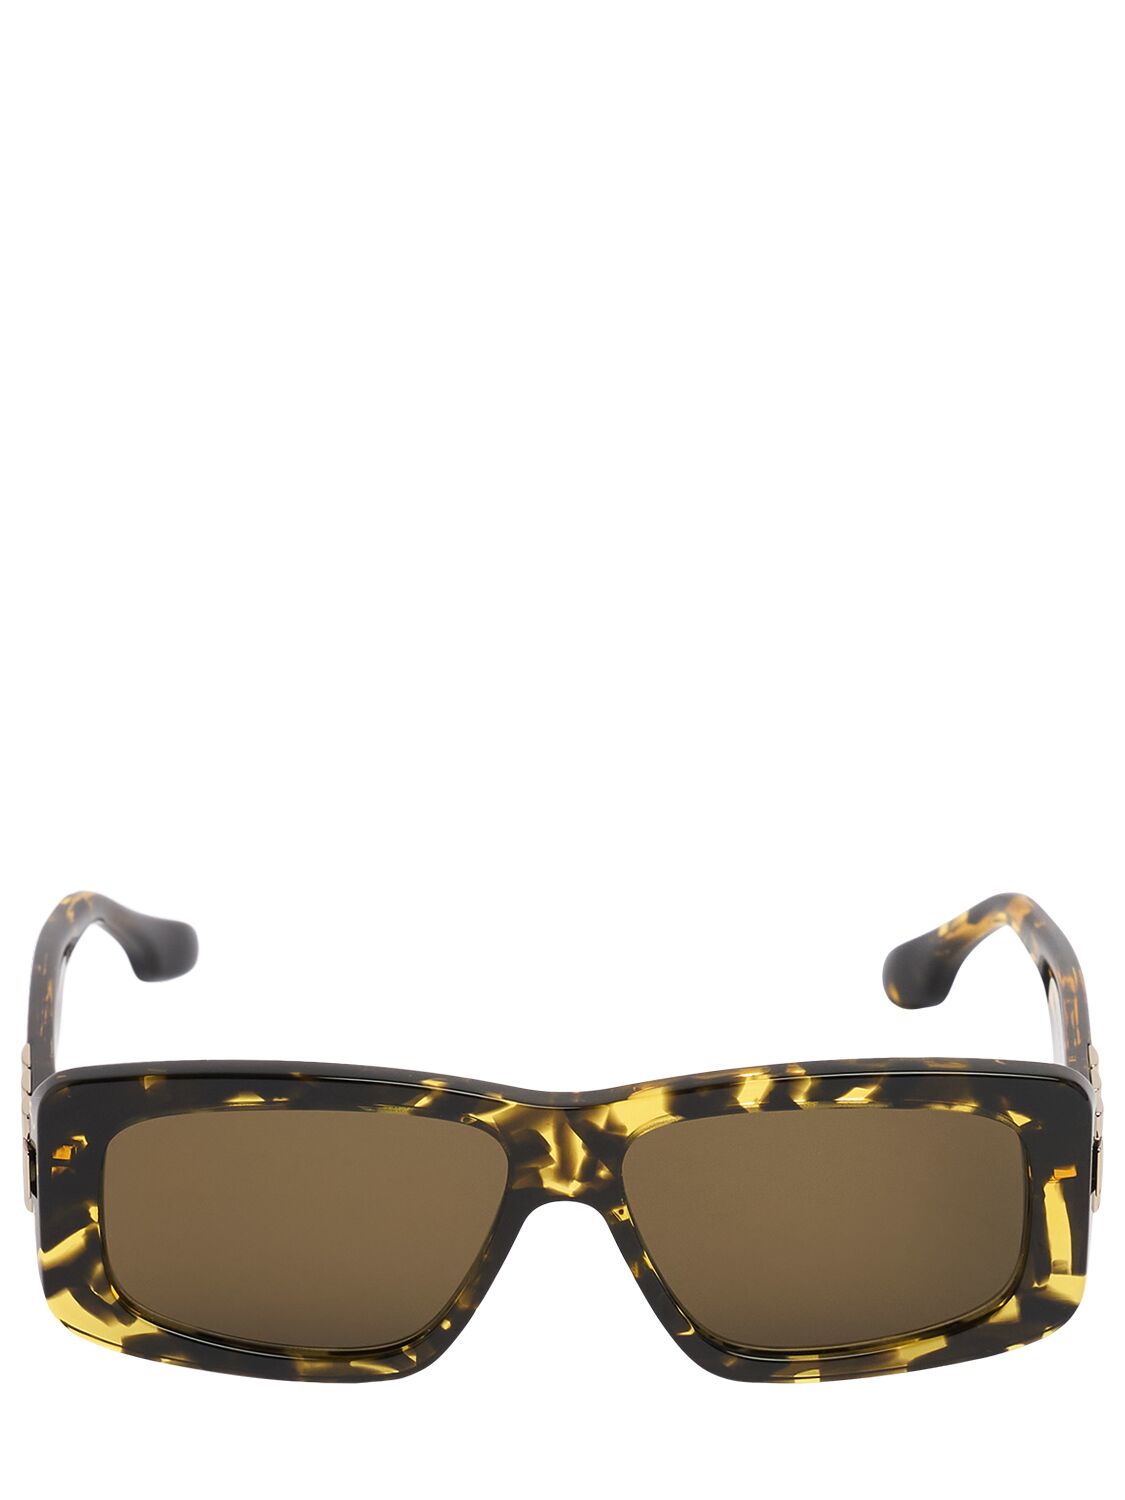 Victoria Beckham Vb Chain Acetate Sunglasses In Black Yellow